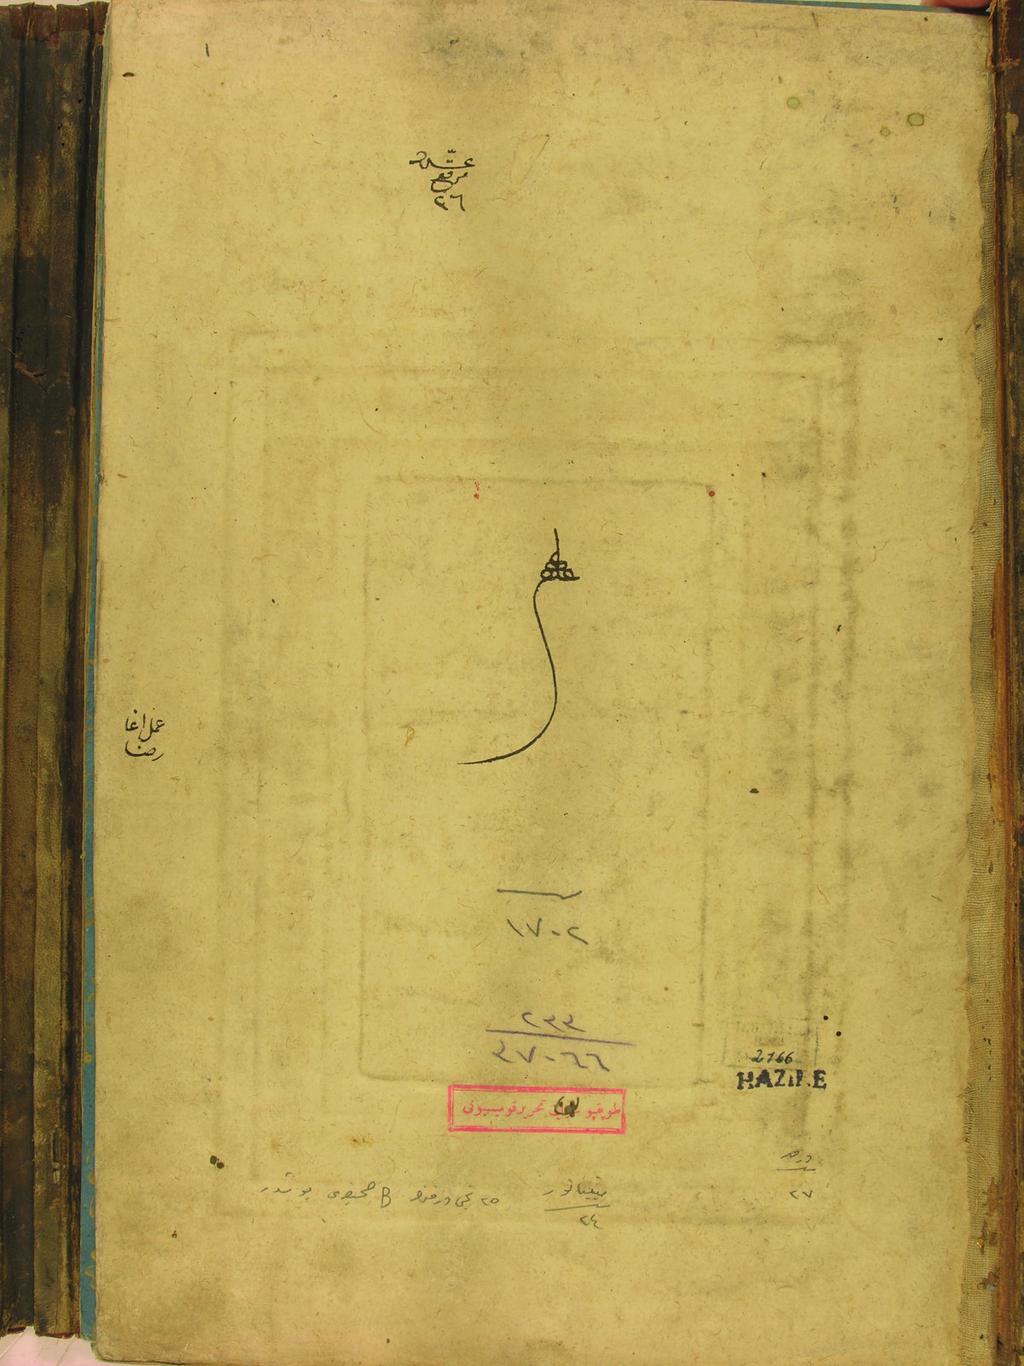 238 Zeren Tanındı F. 21. Amel-i Aga Rıza imzalı sayfa. 23.9 x 17.1 cm. Albüm. Isfahan. 1600 civ.